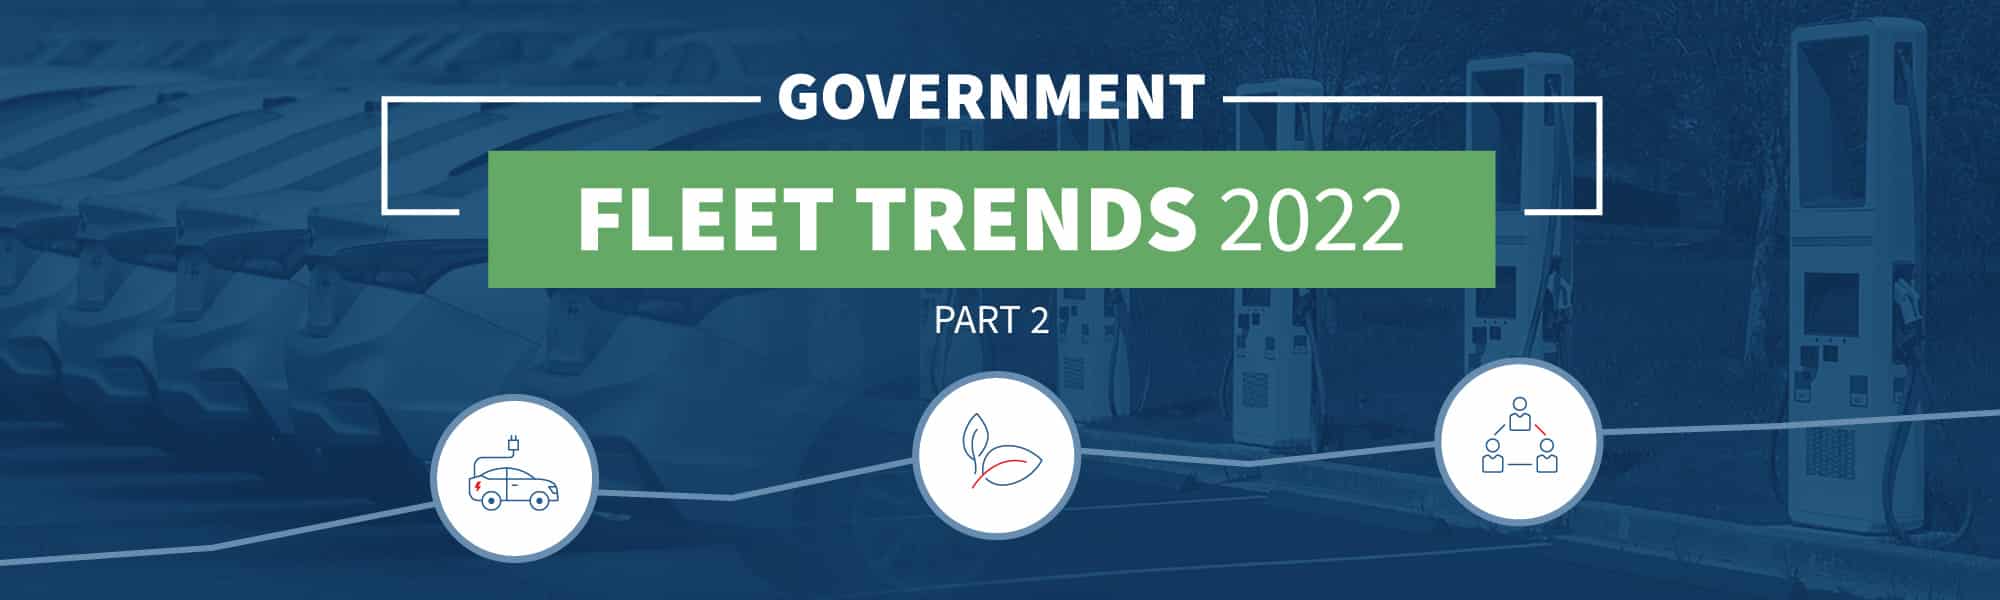 Government Fleet Trends Part 2